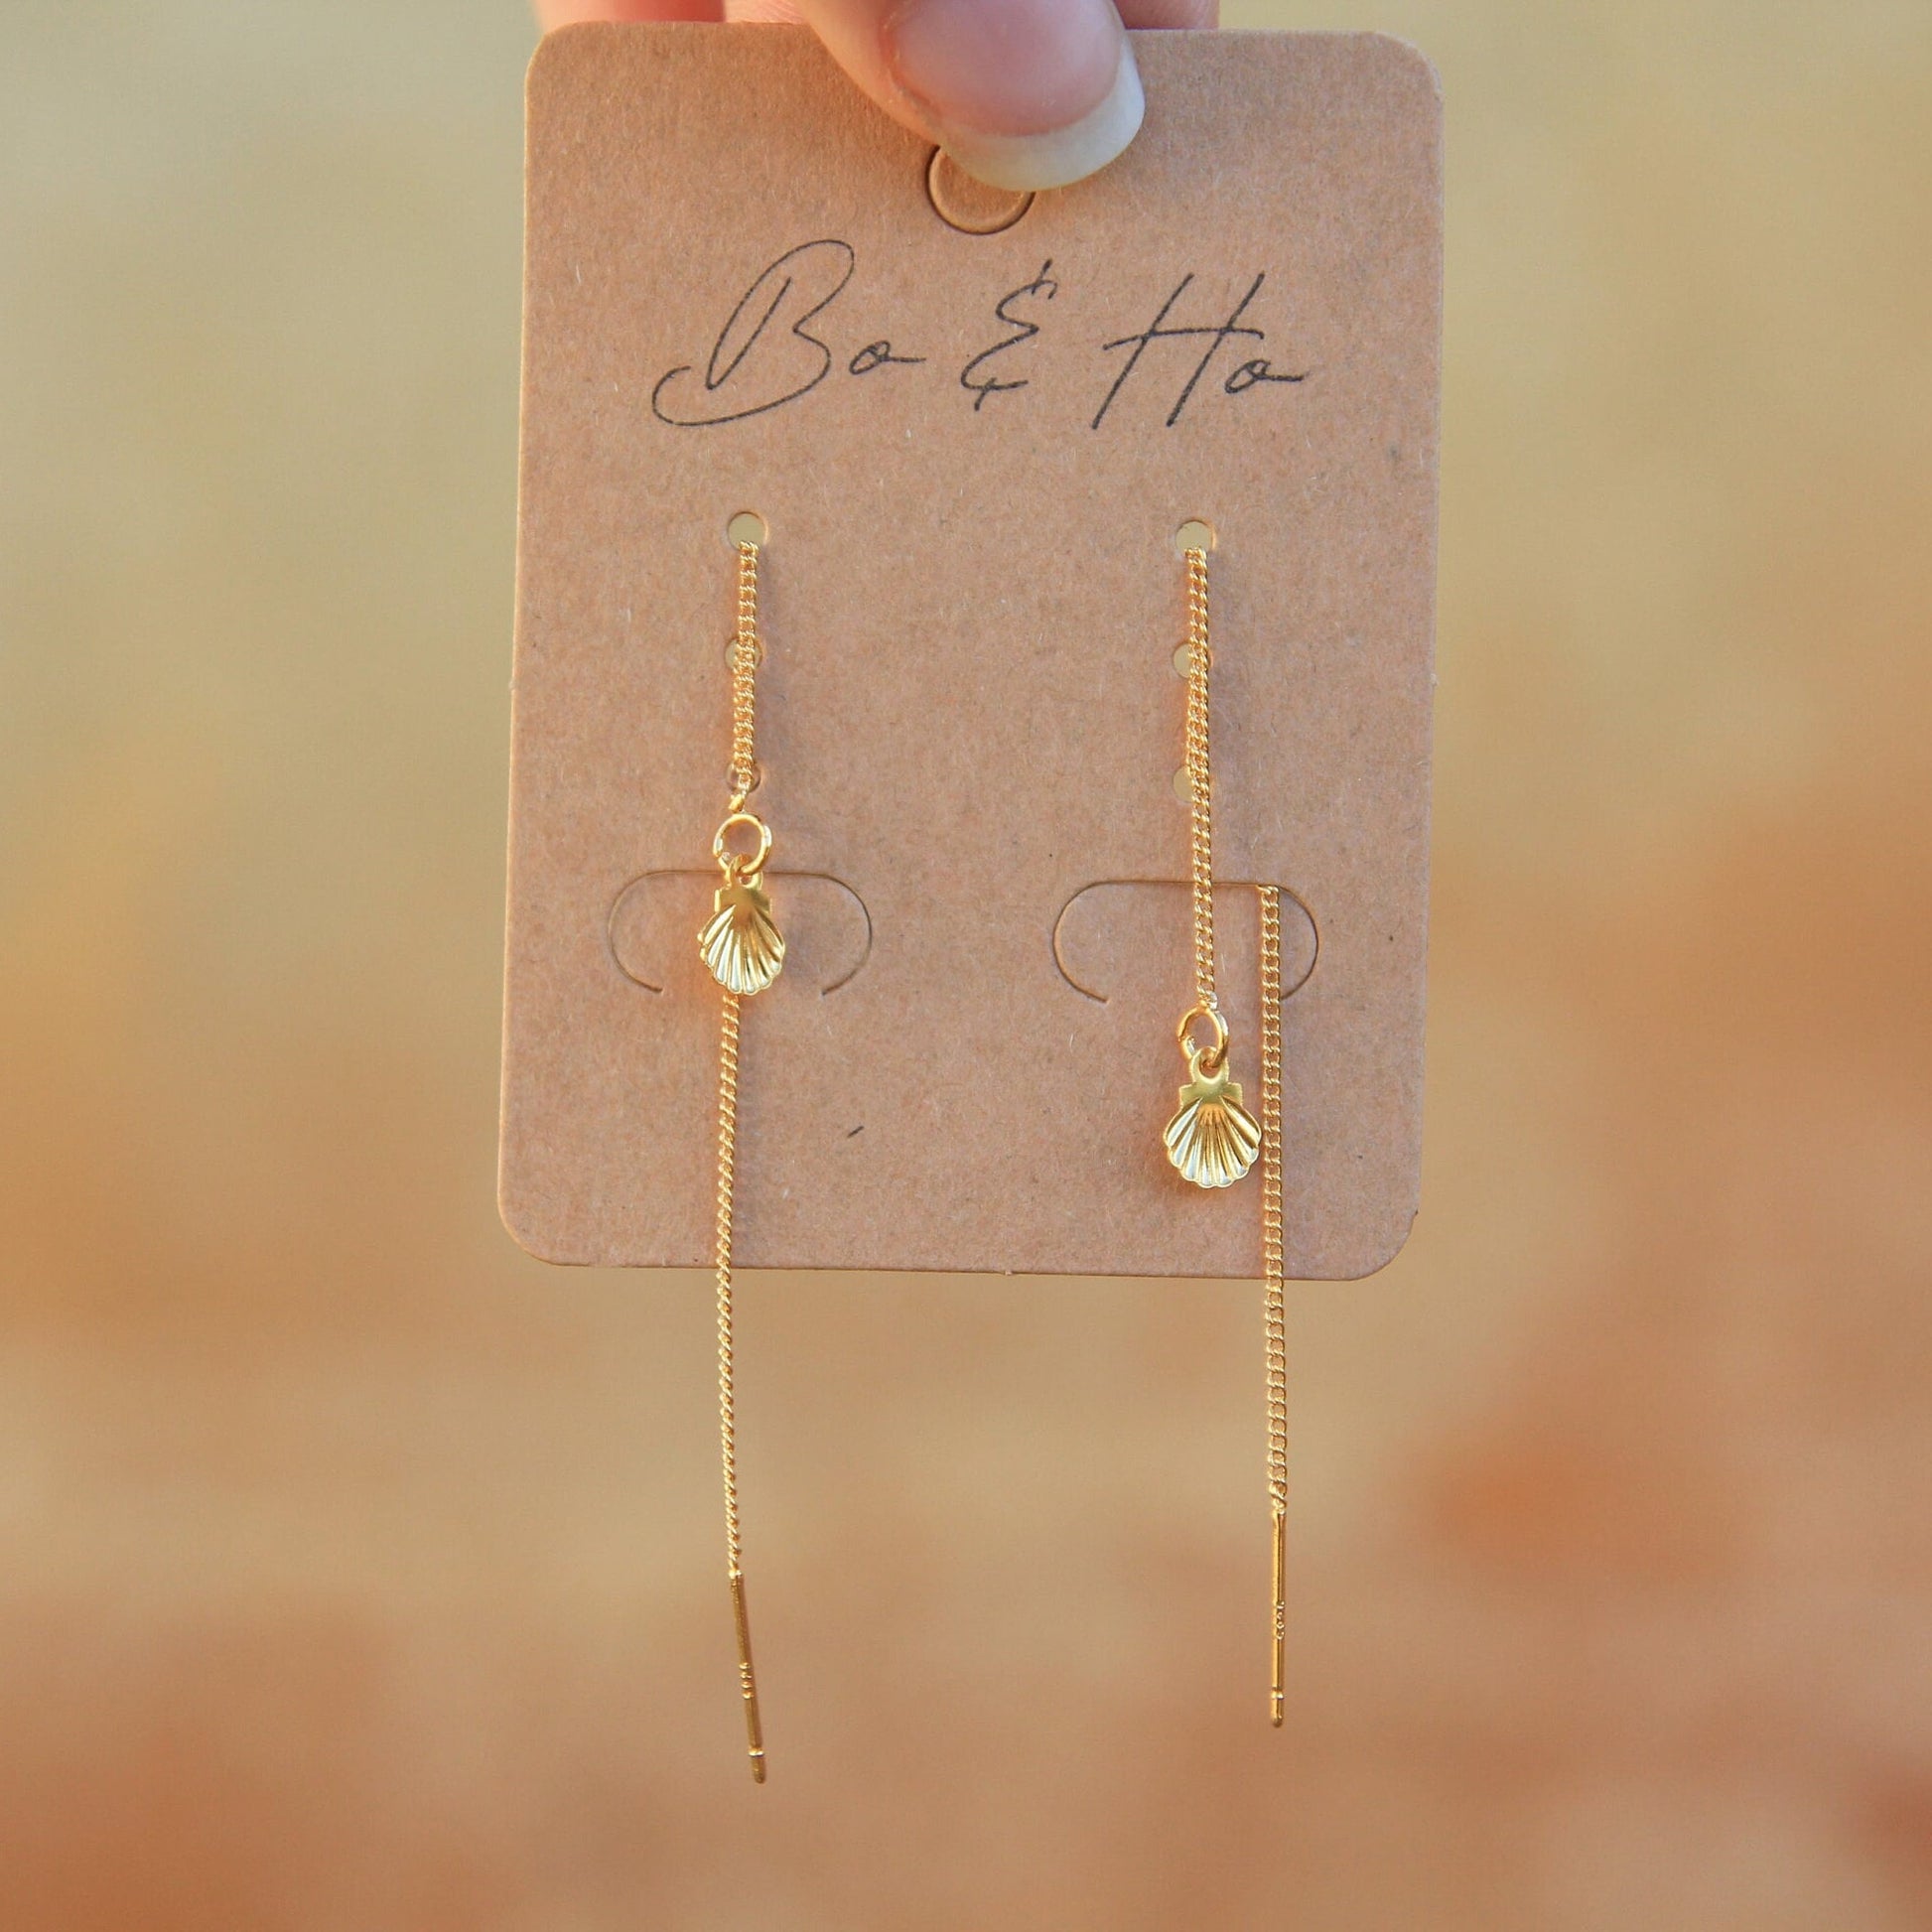 Minimalist Shell Threader Earrings / Delicate Tiny Sea Shell Dangly Earrings